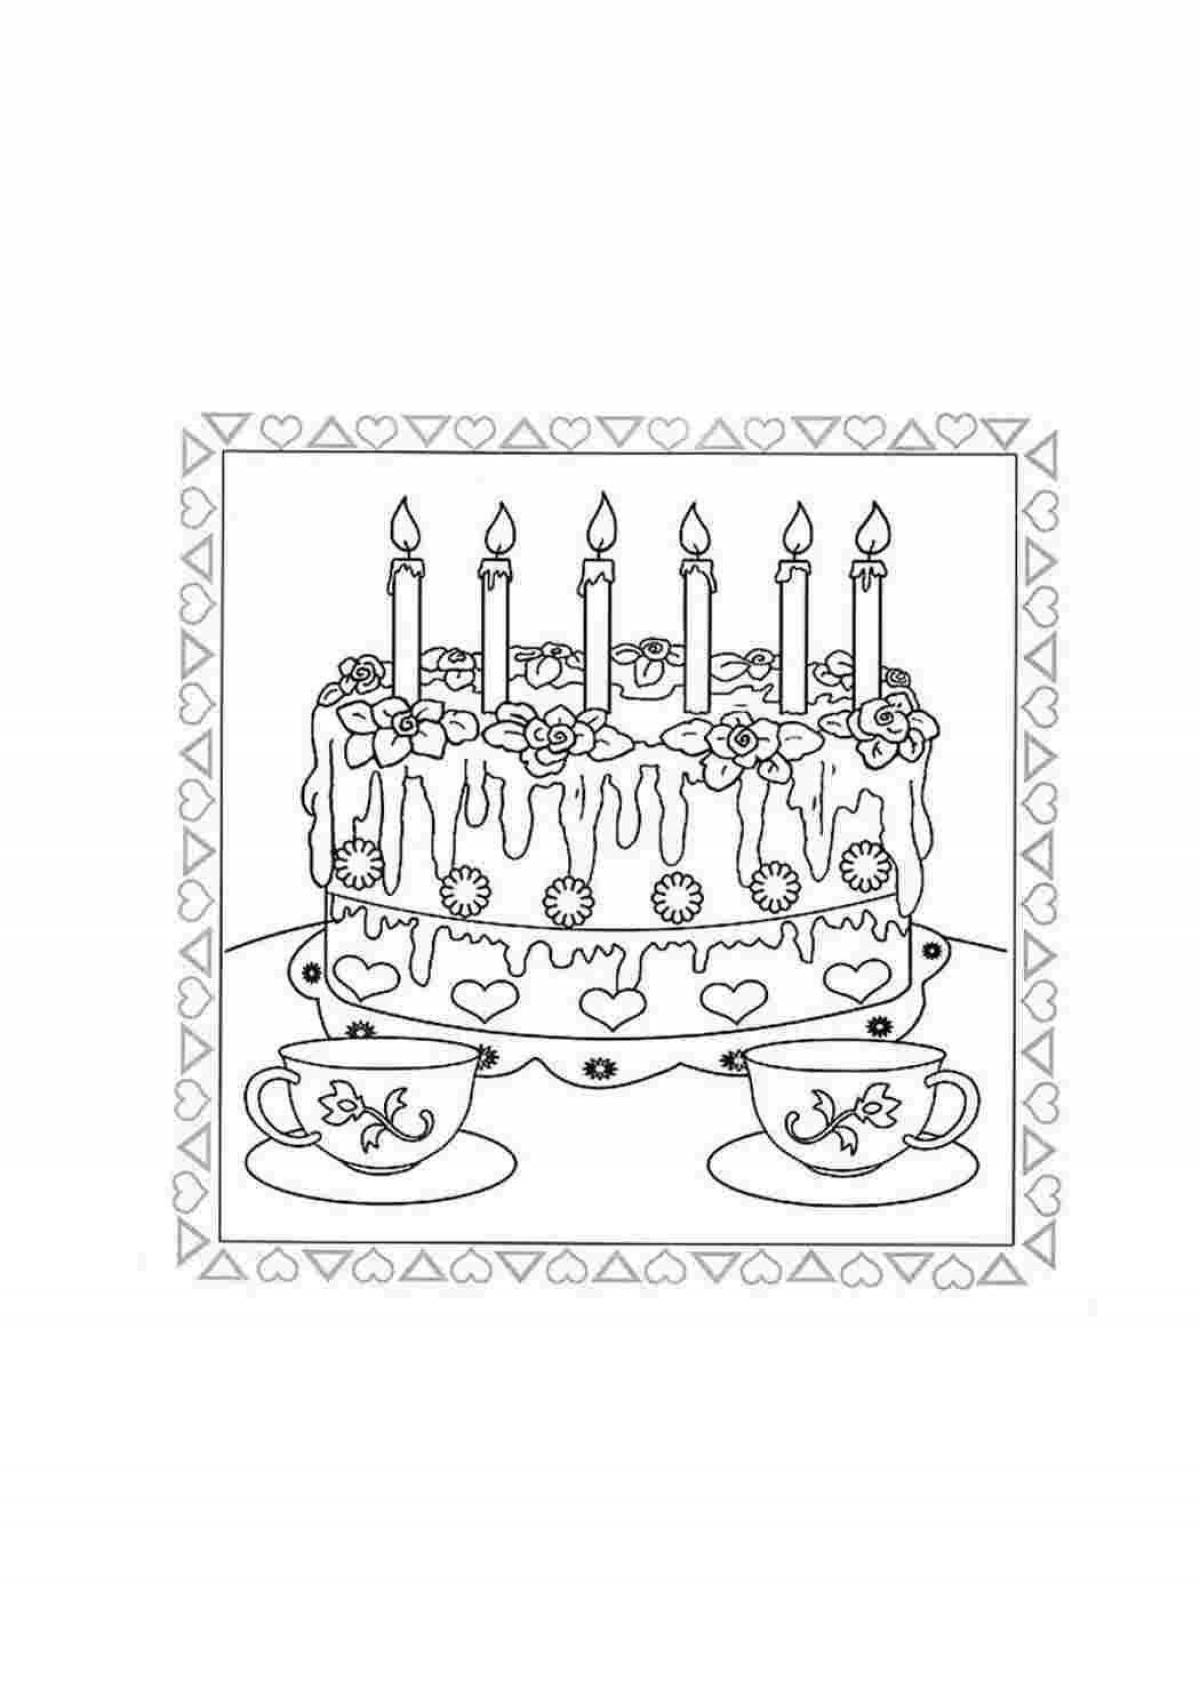 Rampant birthday cake coloring page